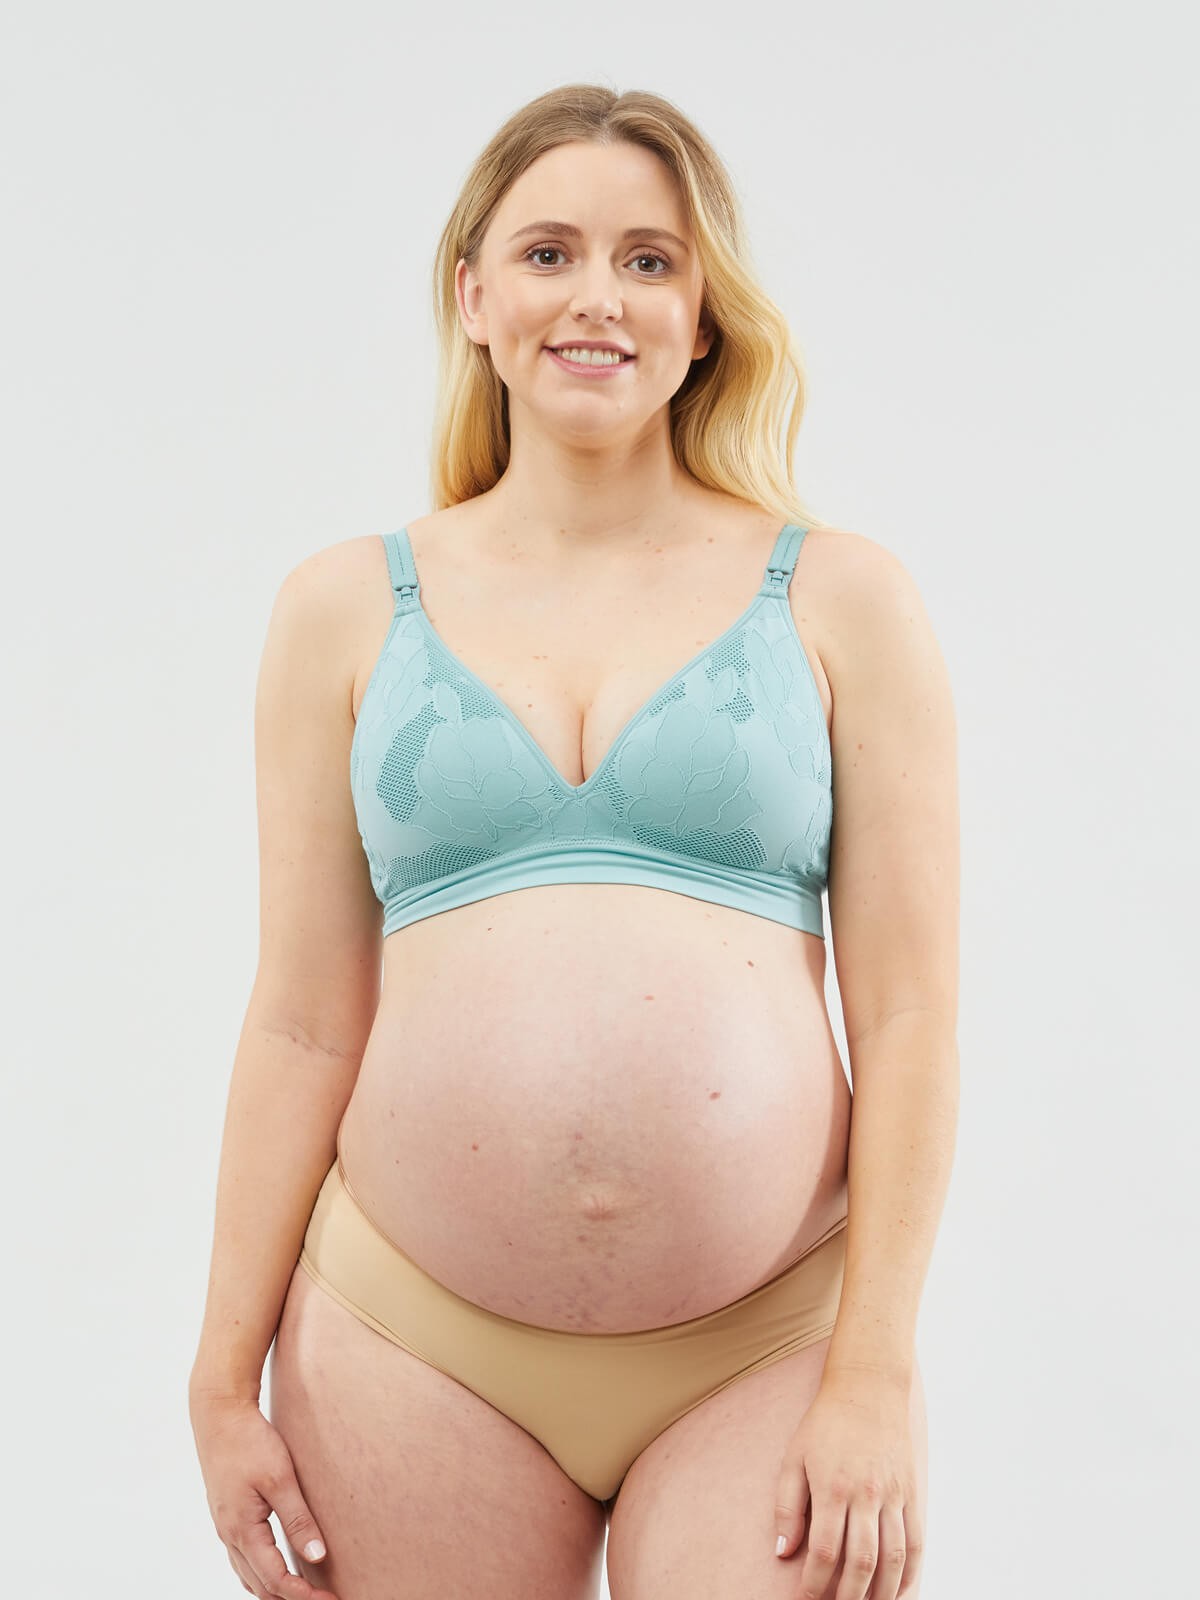 Women Openable Feeding Nursing Maternity Bra Pregnant Underwear